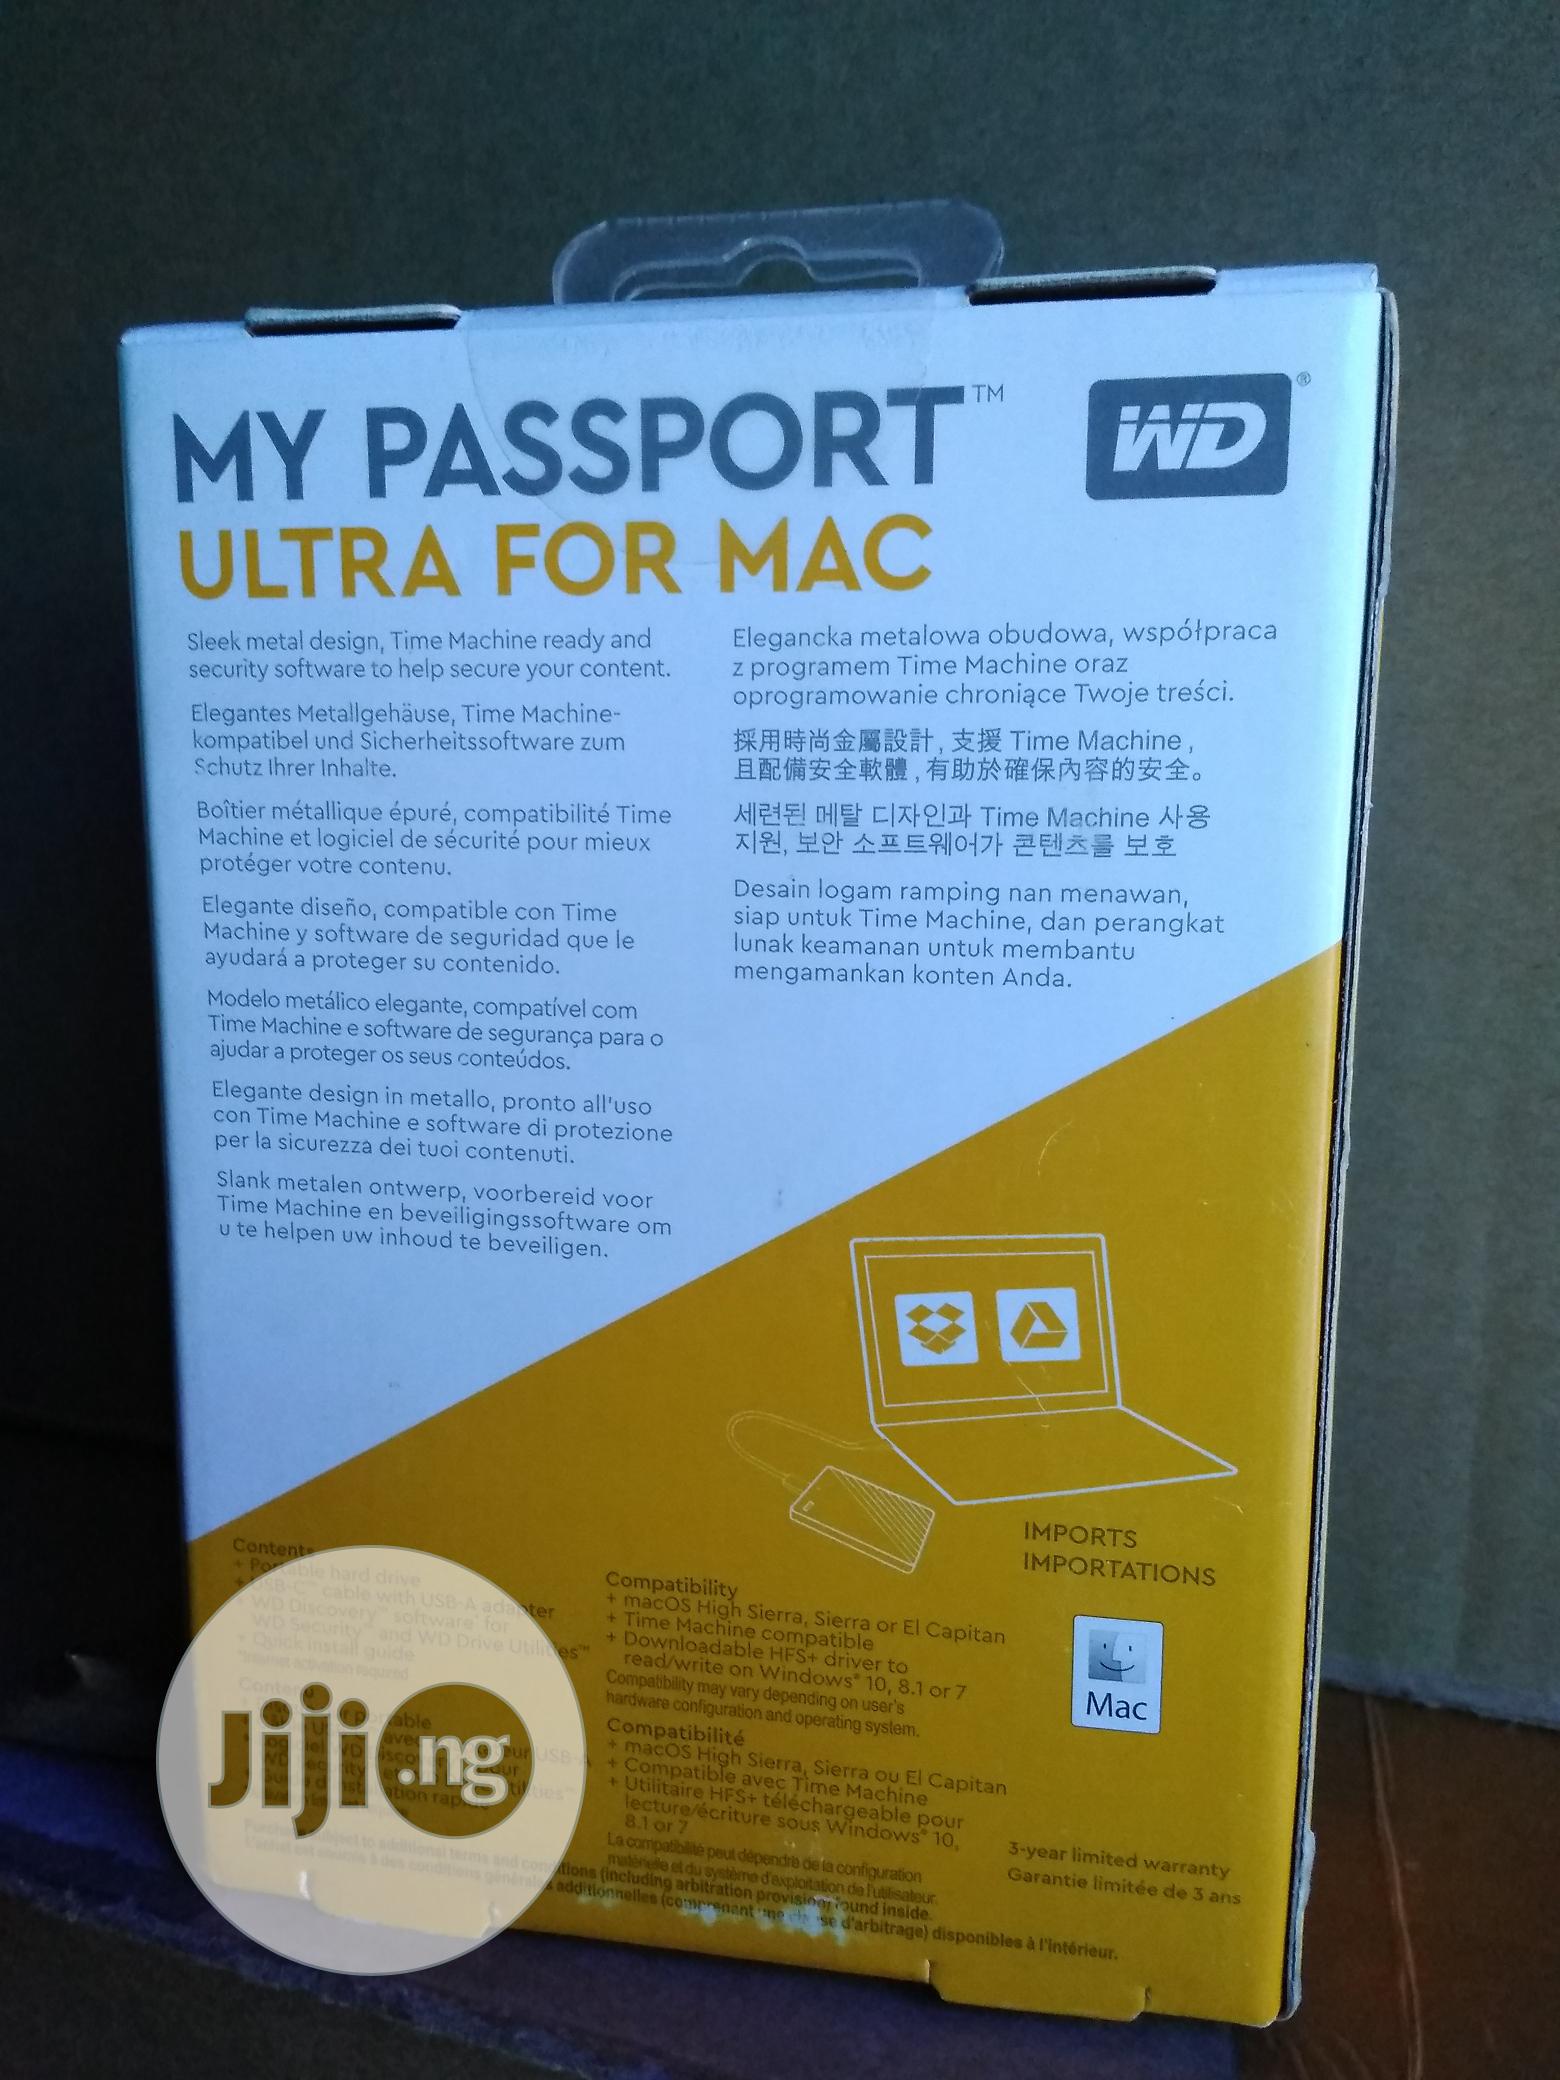 wd passport ultra for mac